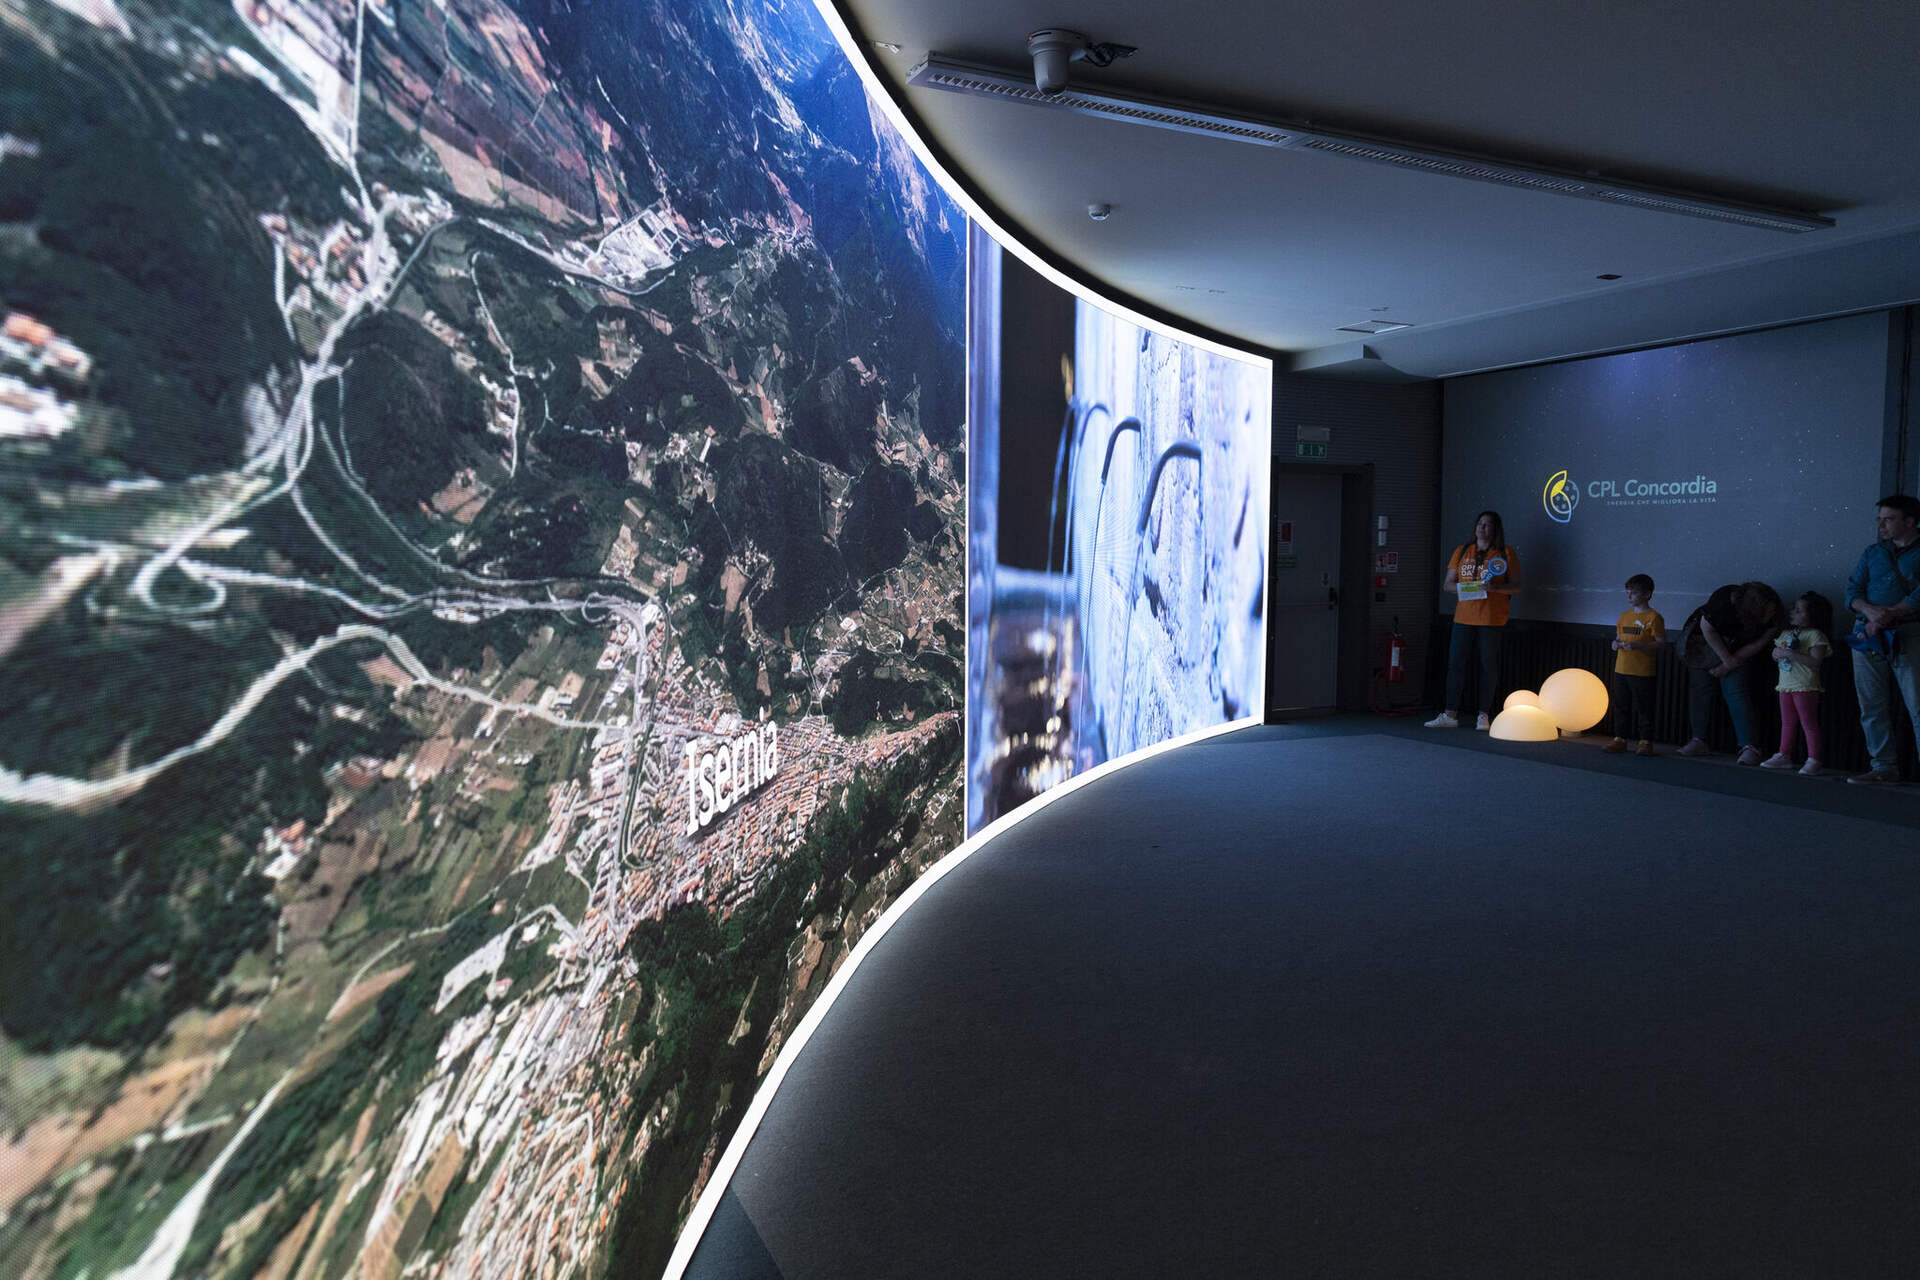 CPL Concordia: giganteschi schermi informativi a parete